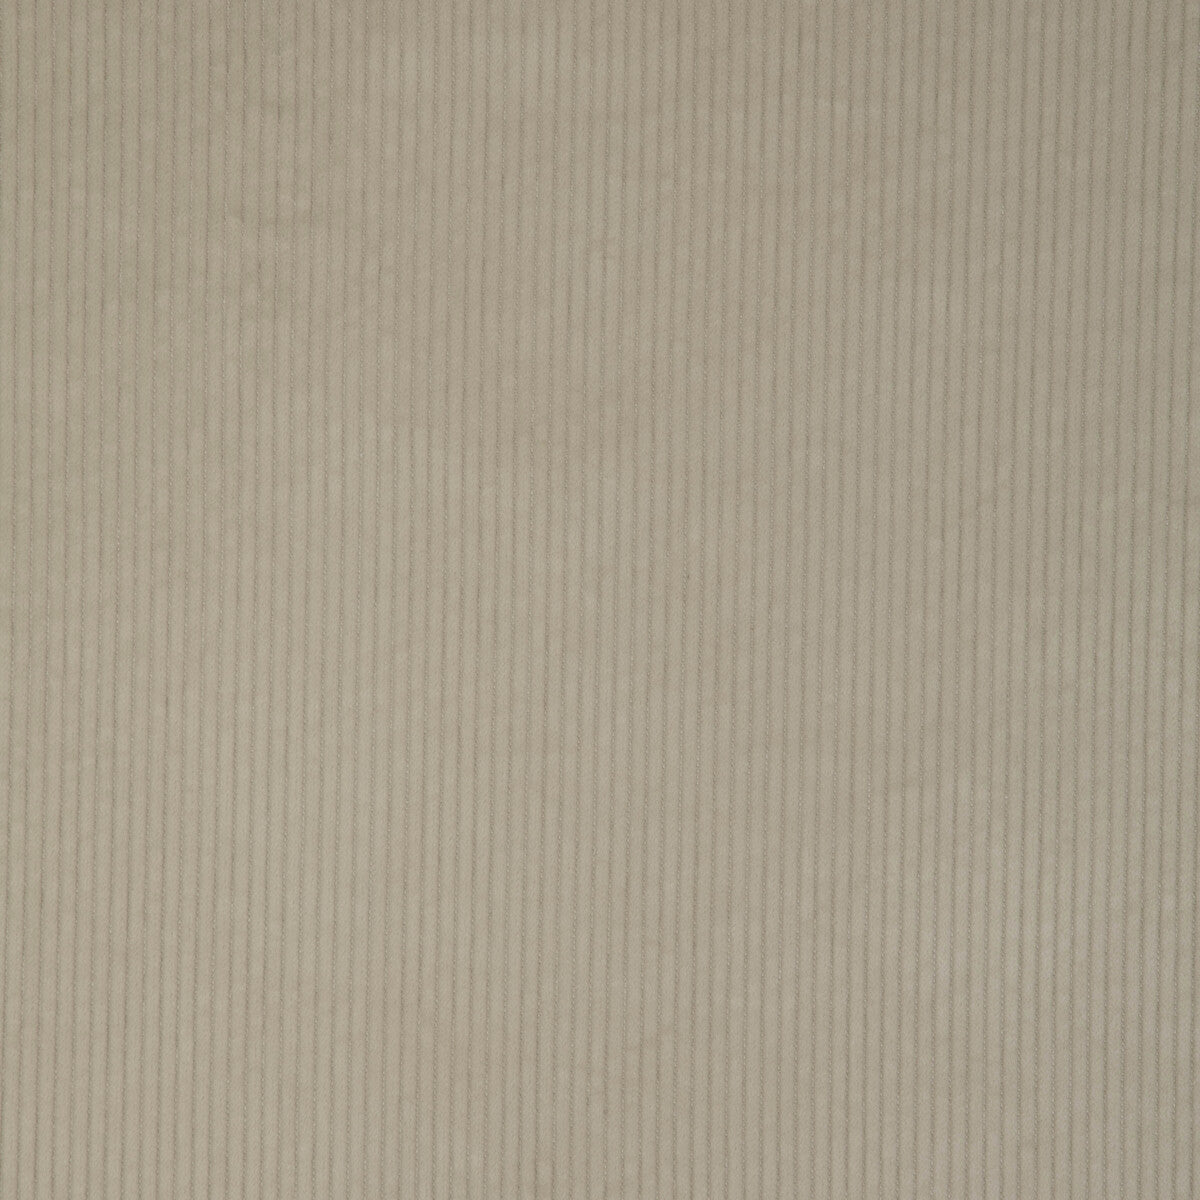 Kravet Smart fabric in 37006-1601 color - pattern 37006.1601.0 - by Kravet Smart